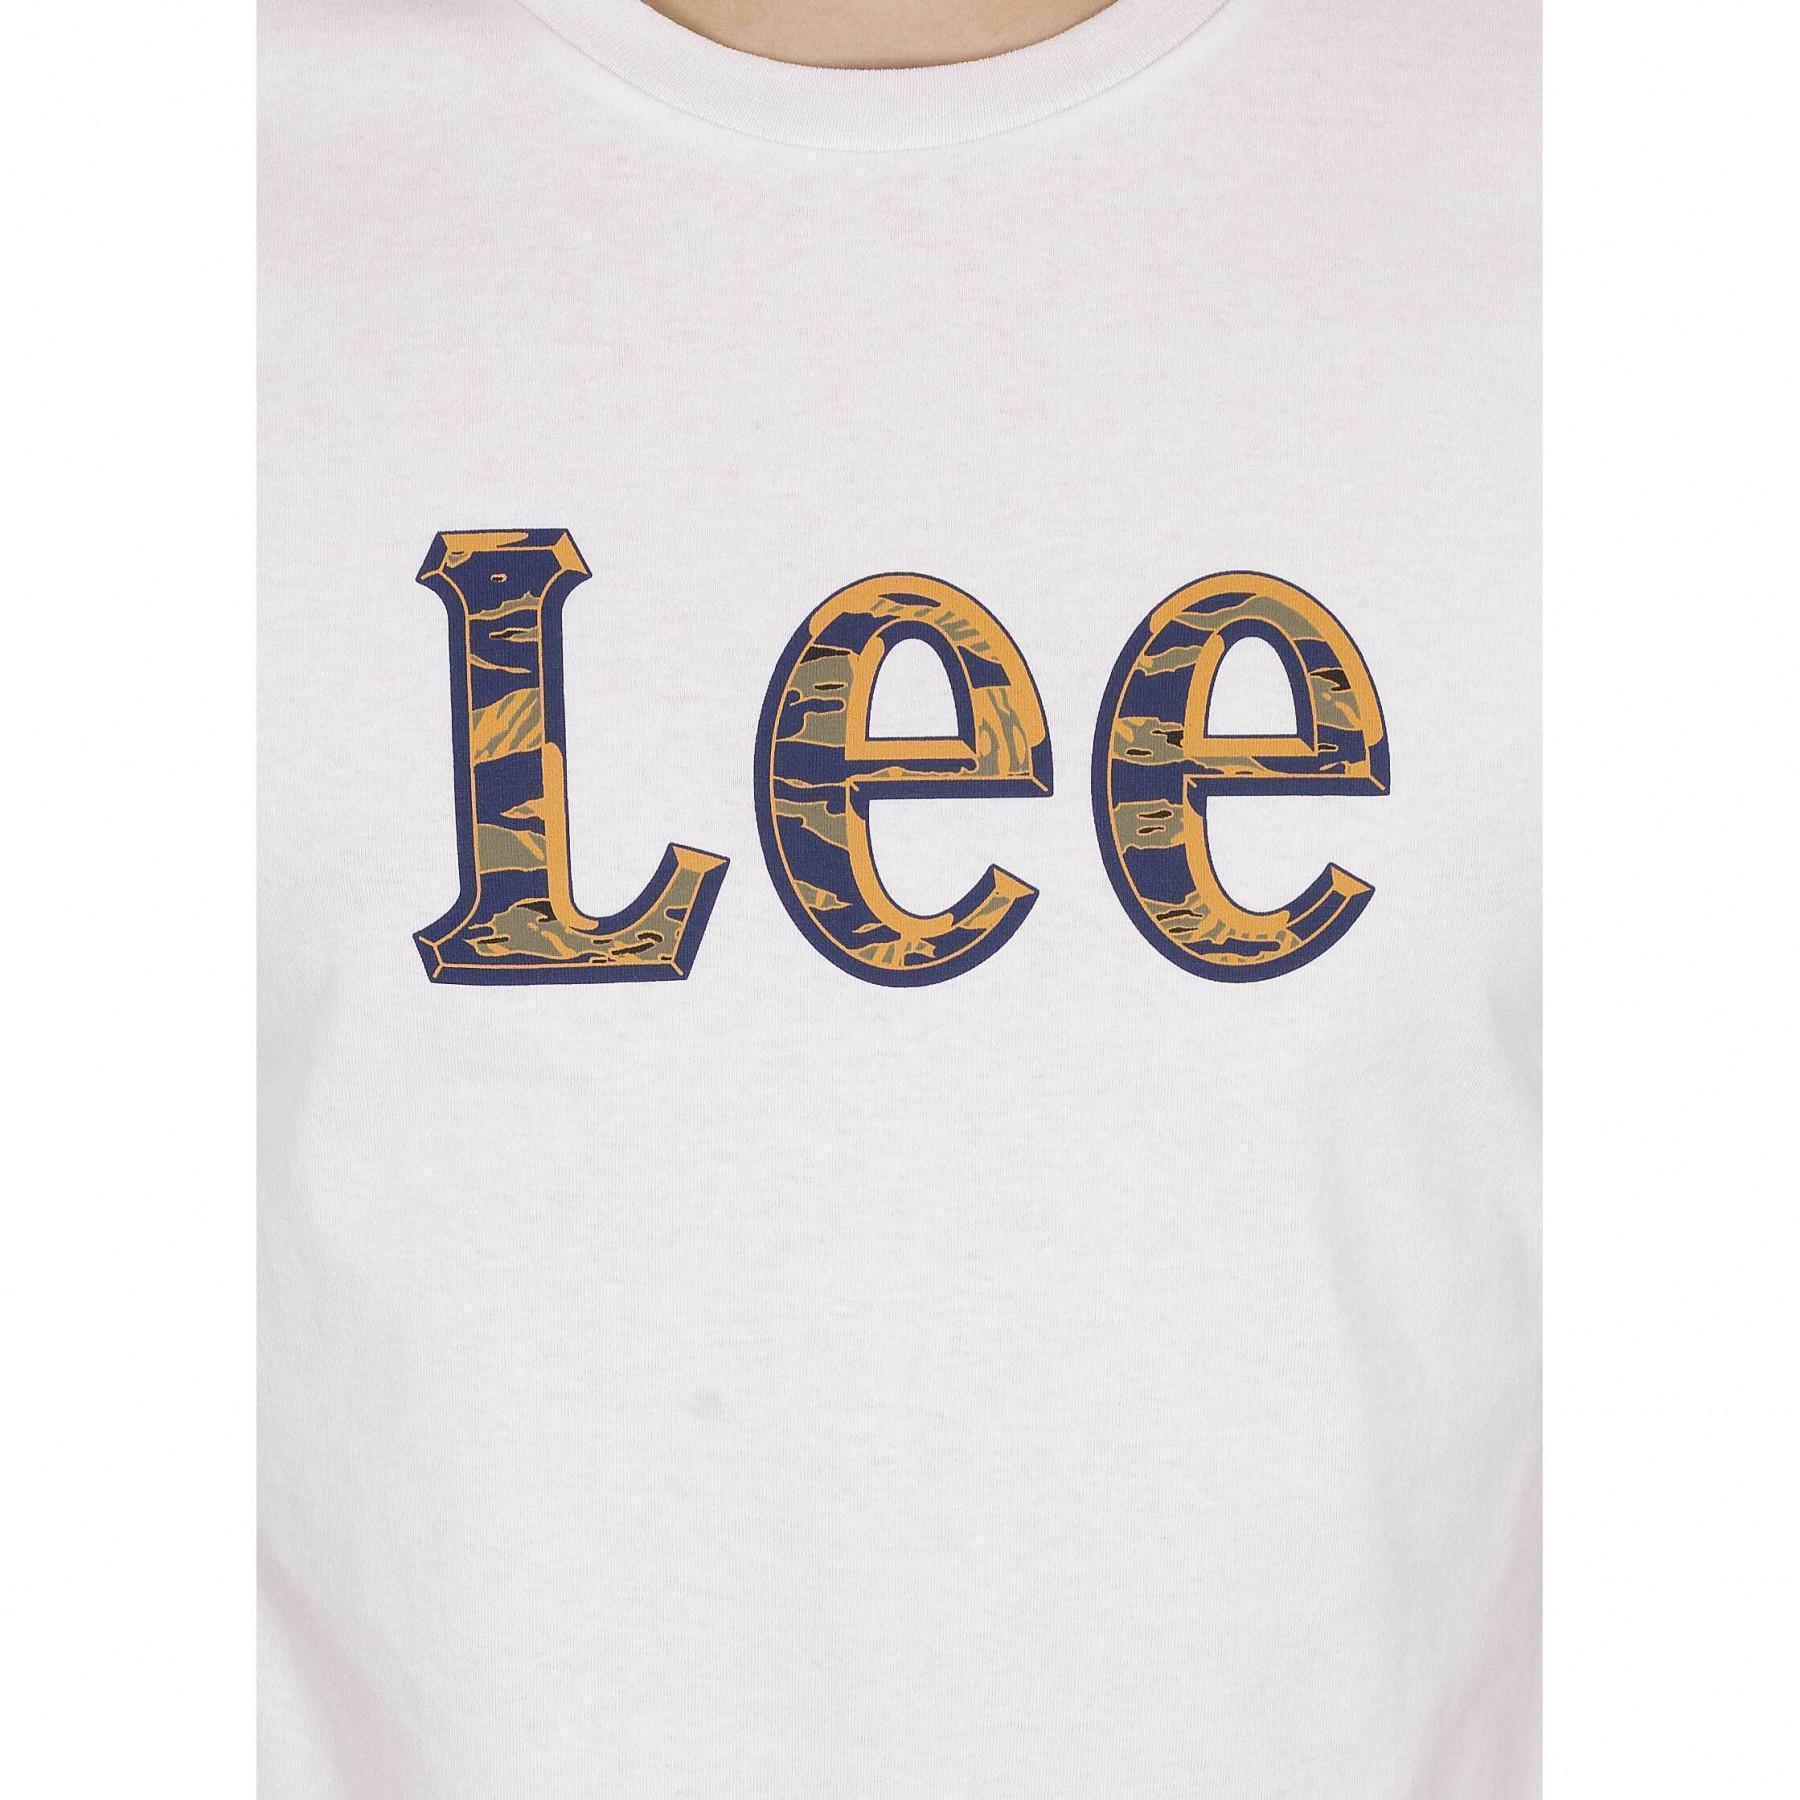 Camiseta Lee Camo Package Bright White